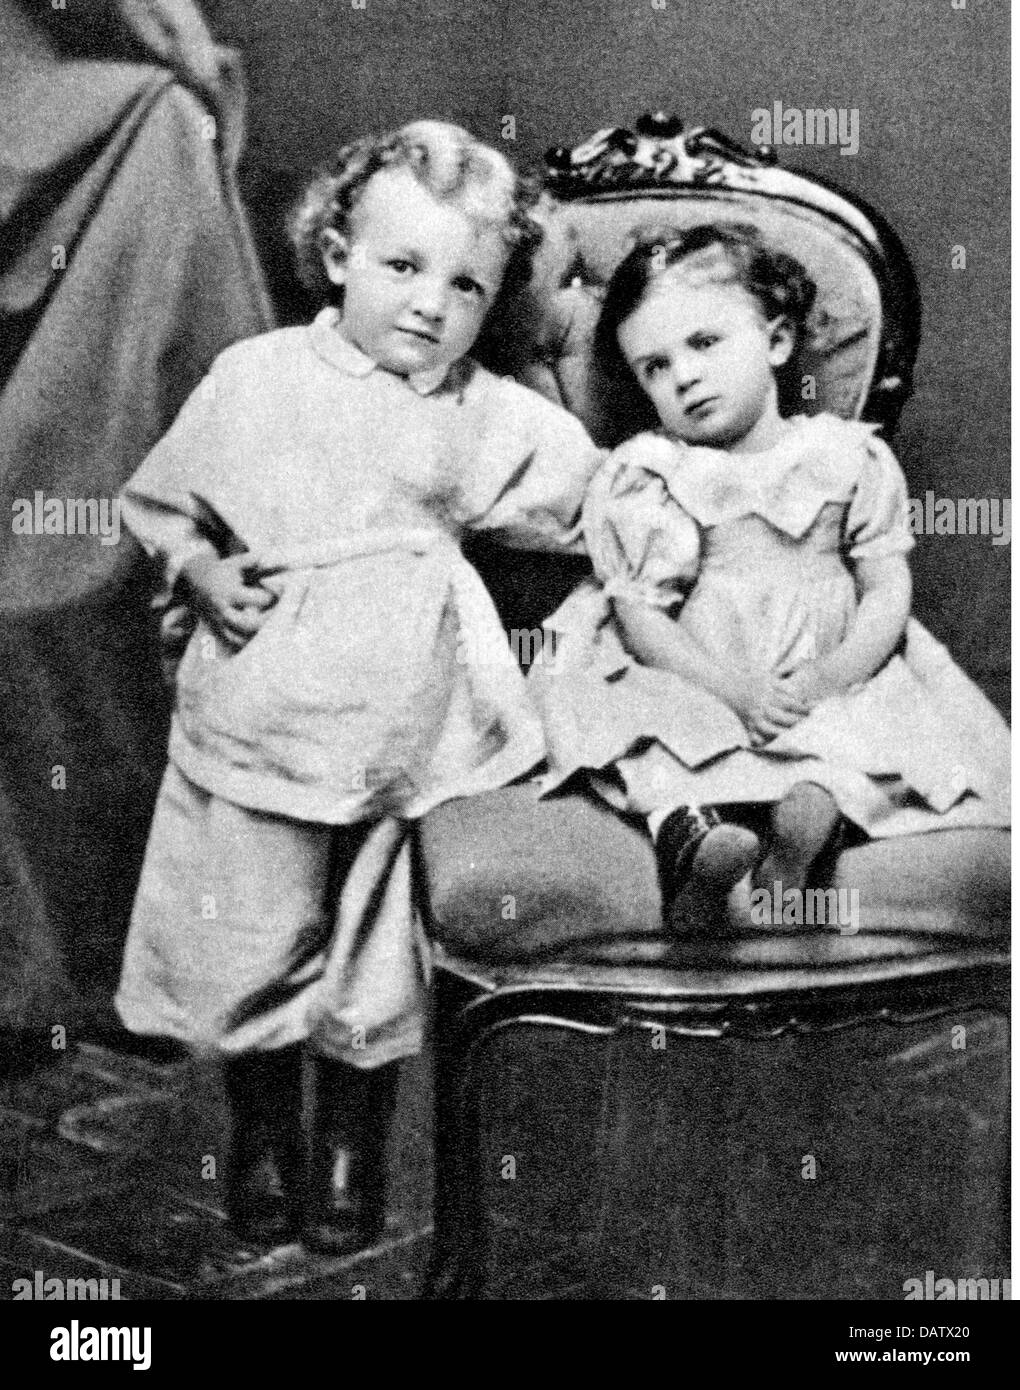 Lenin (Vladimir Ilyich Ulyanov), 22.4.1870 - 21.1.1924, Russian politician, half length, as a child, with his sister Olga, Uljanovsk, 1874, Stock Photo